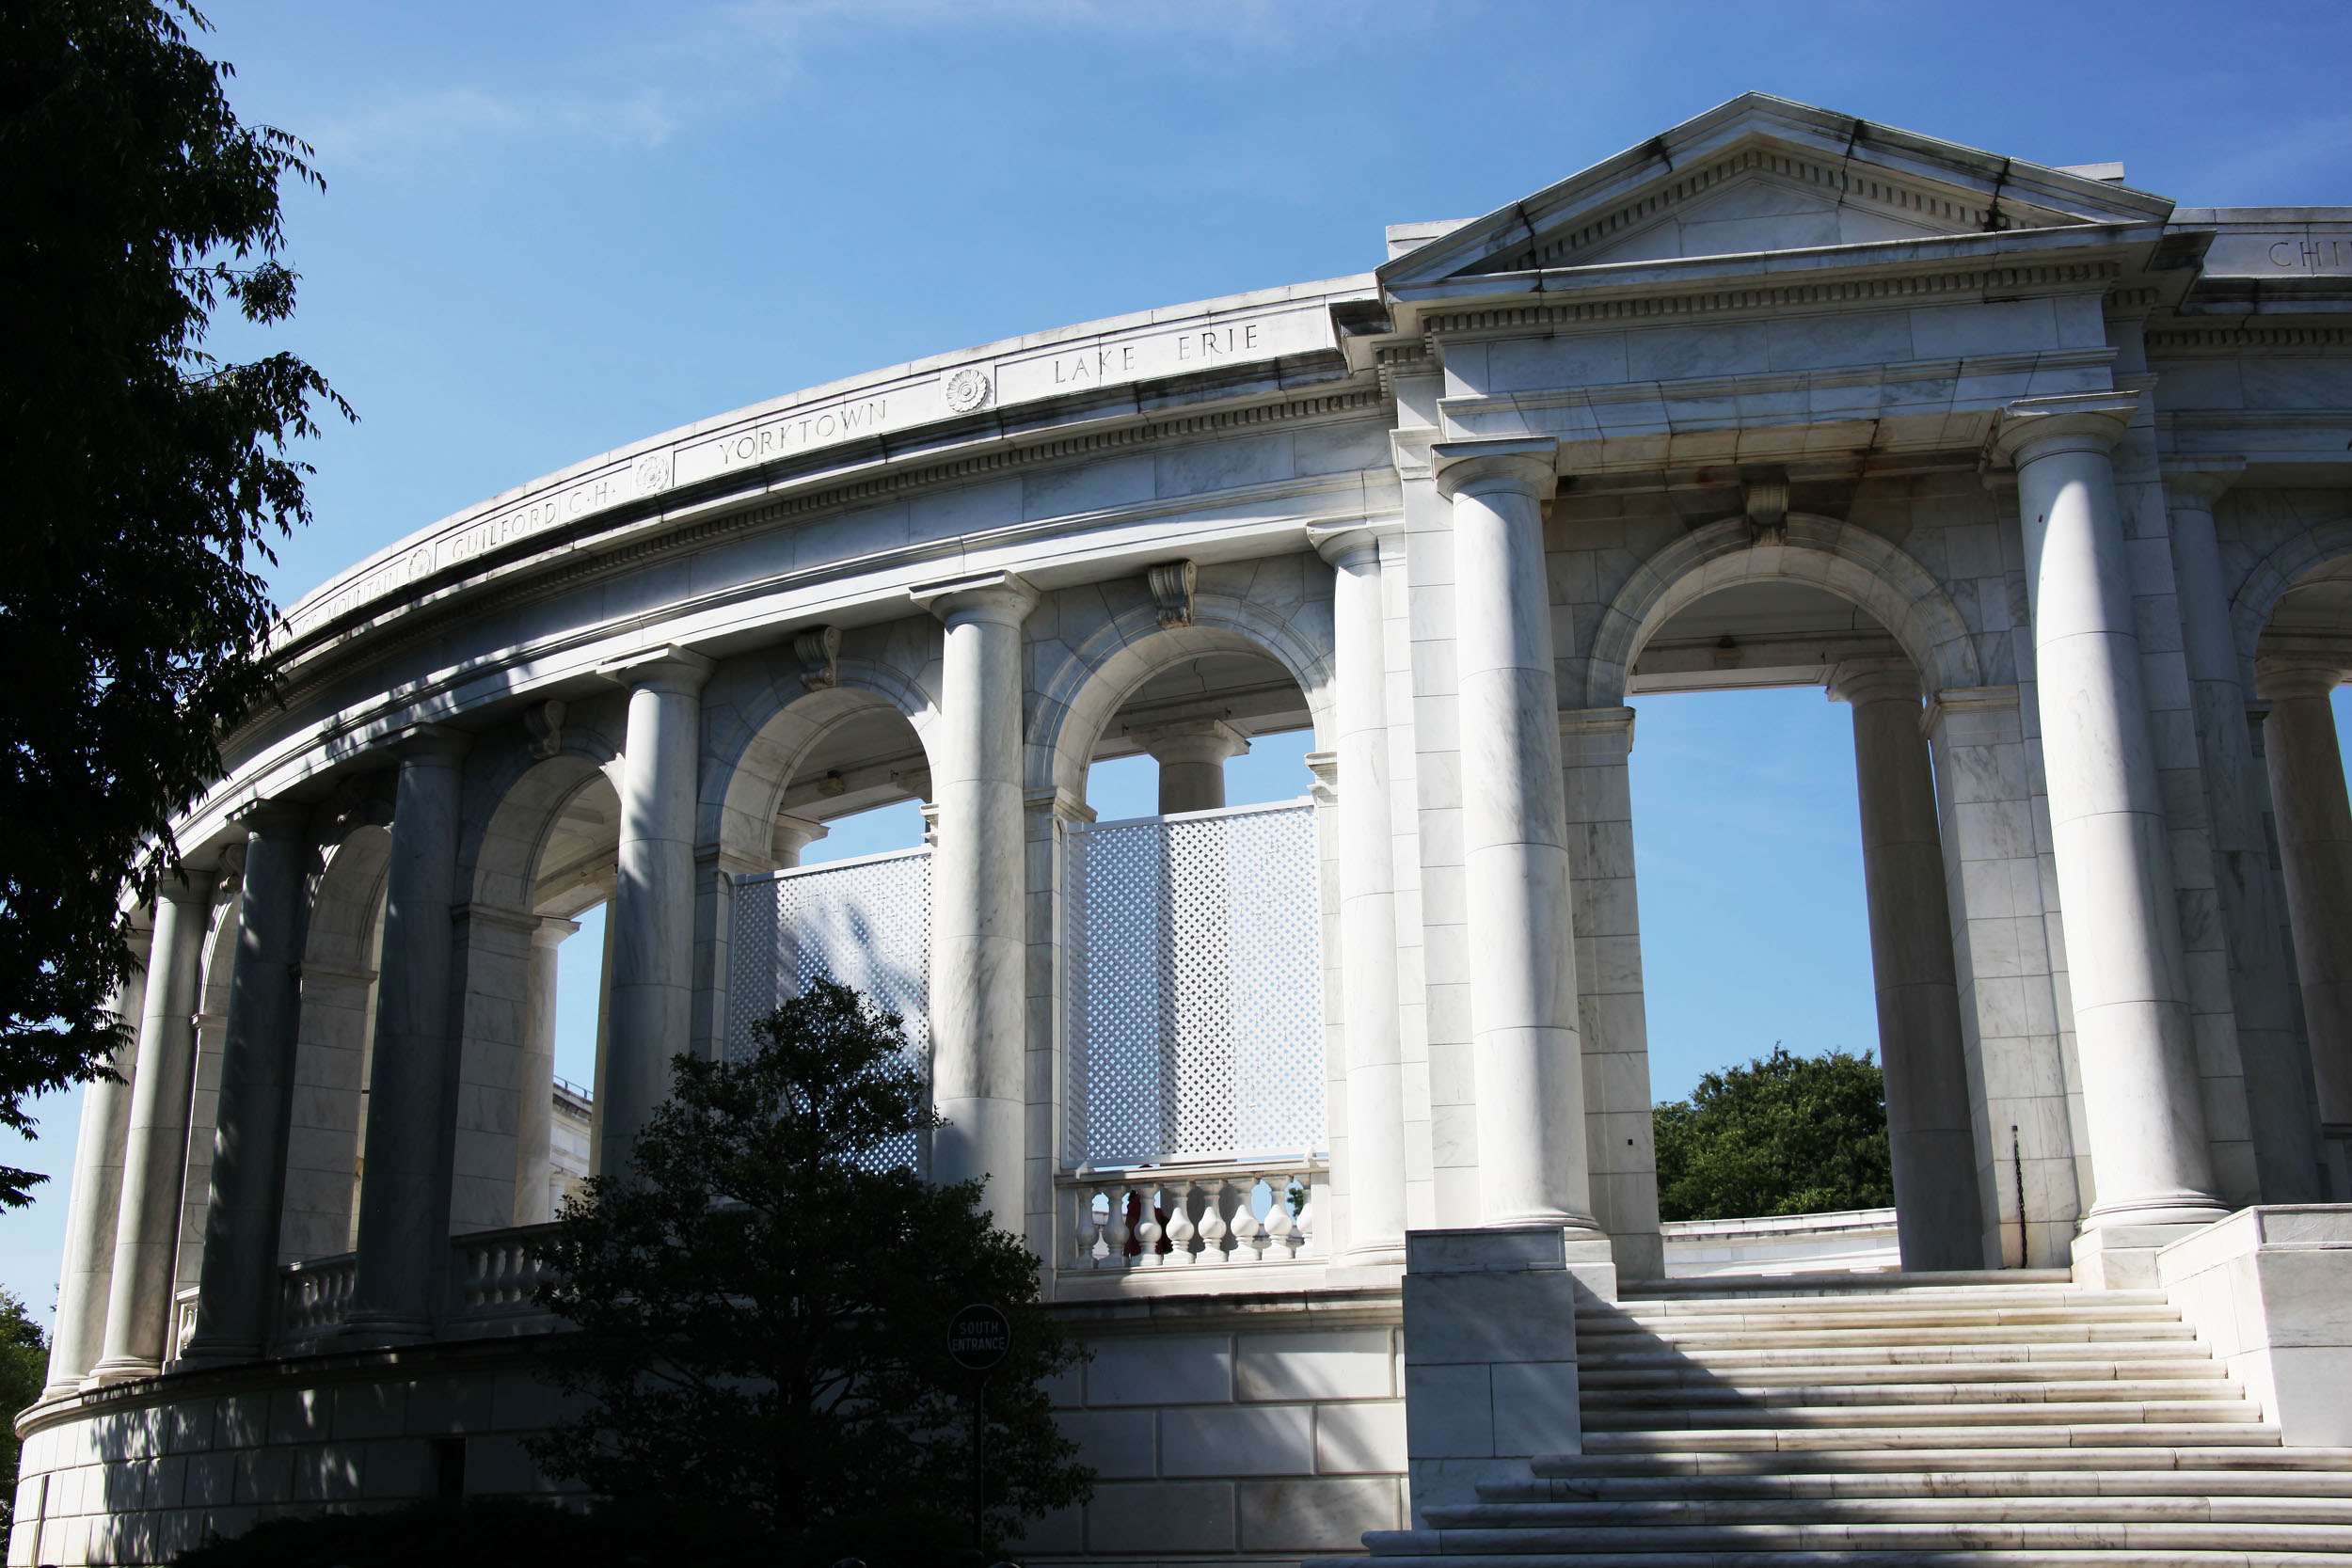 memorial amphitheater3 The Memorial Amphitheater at Arlington National Cemetery